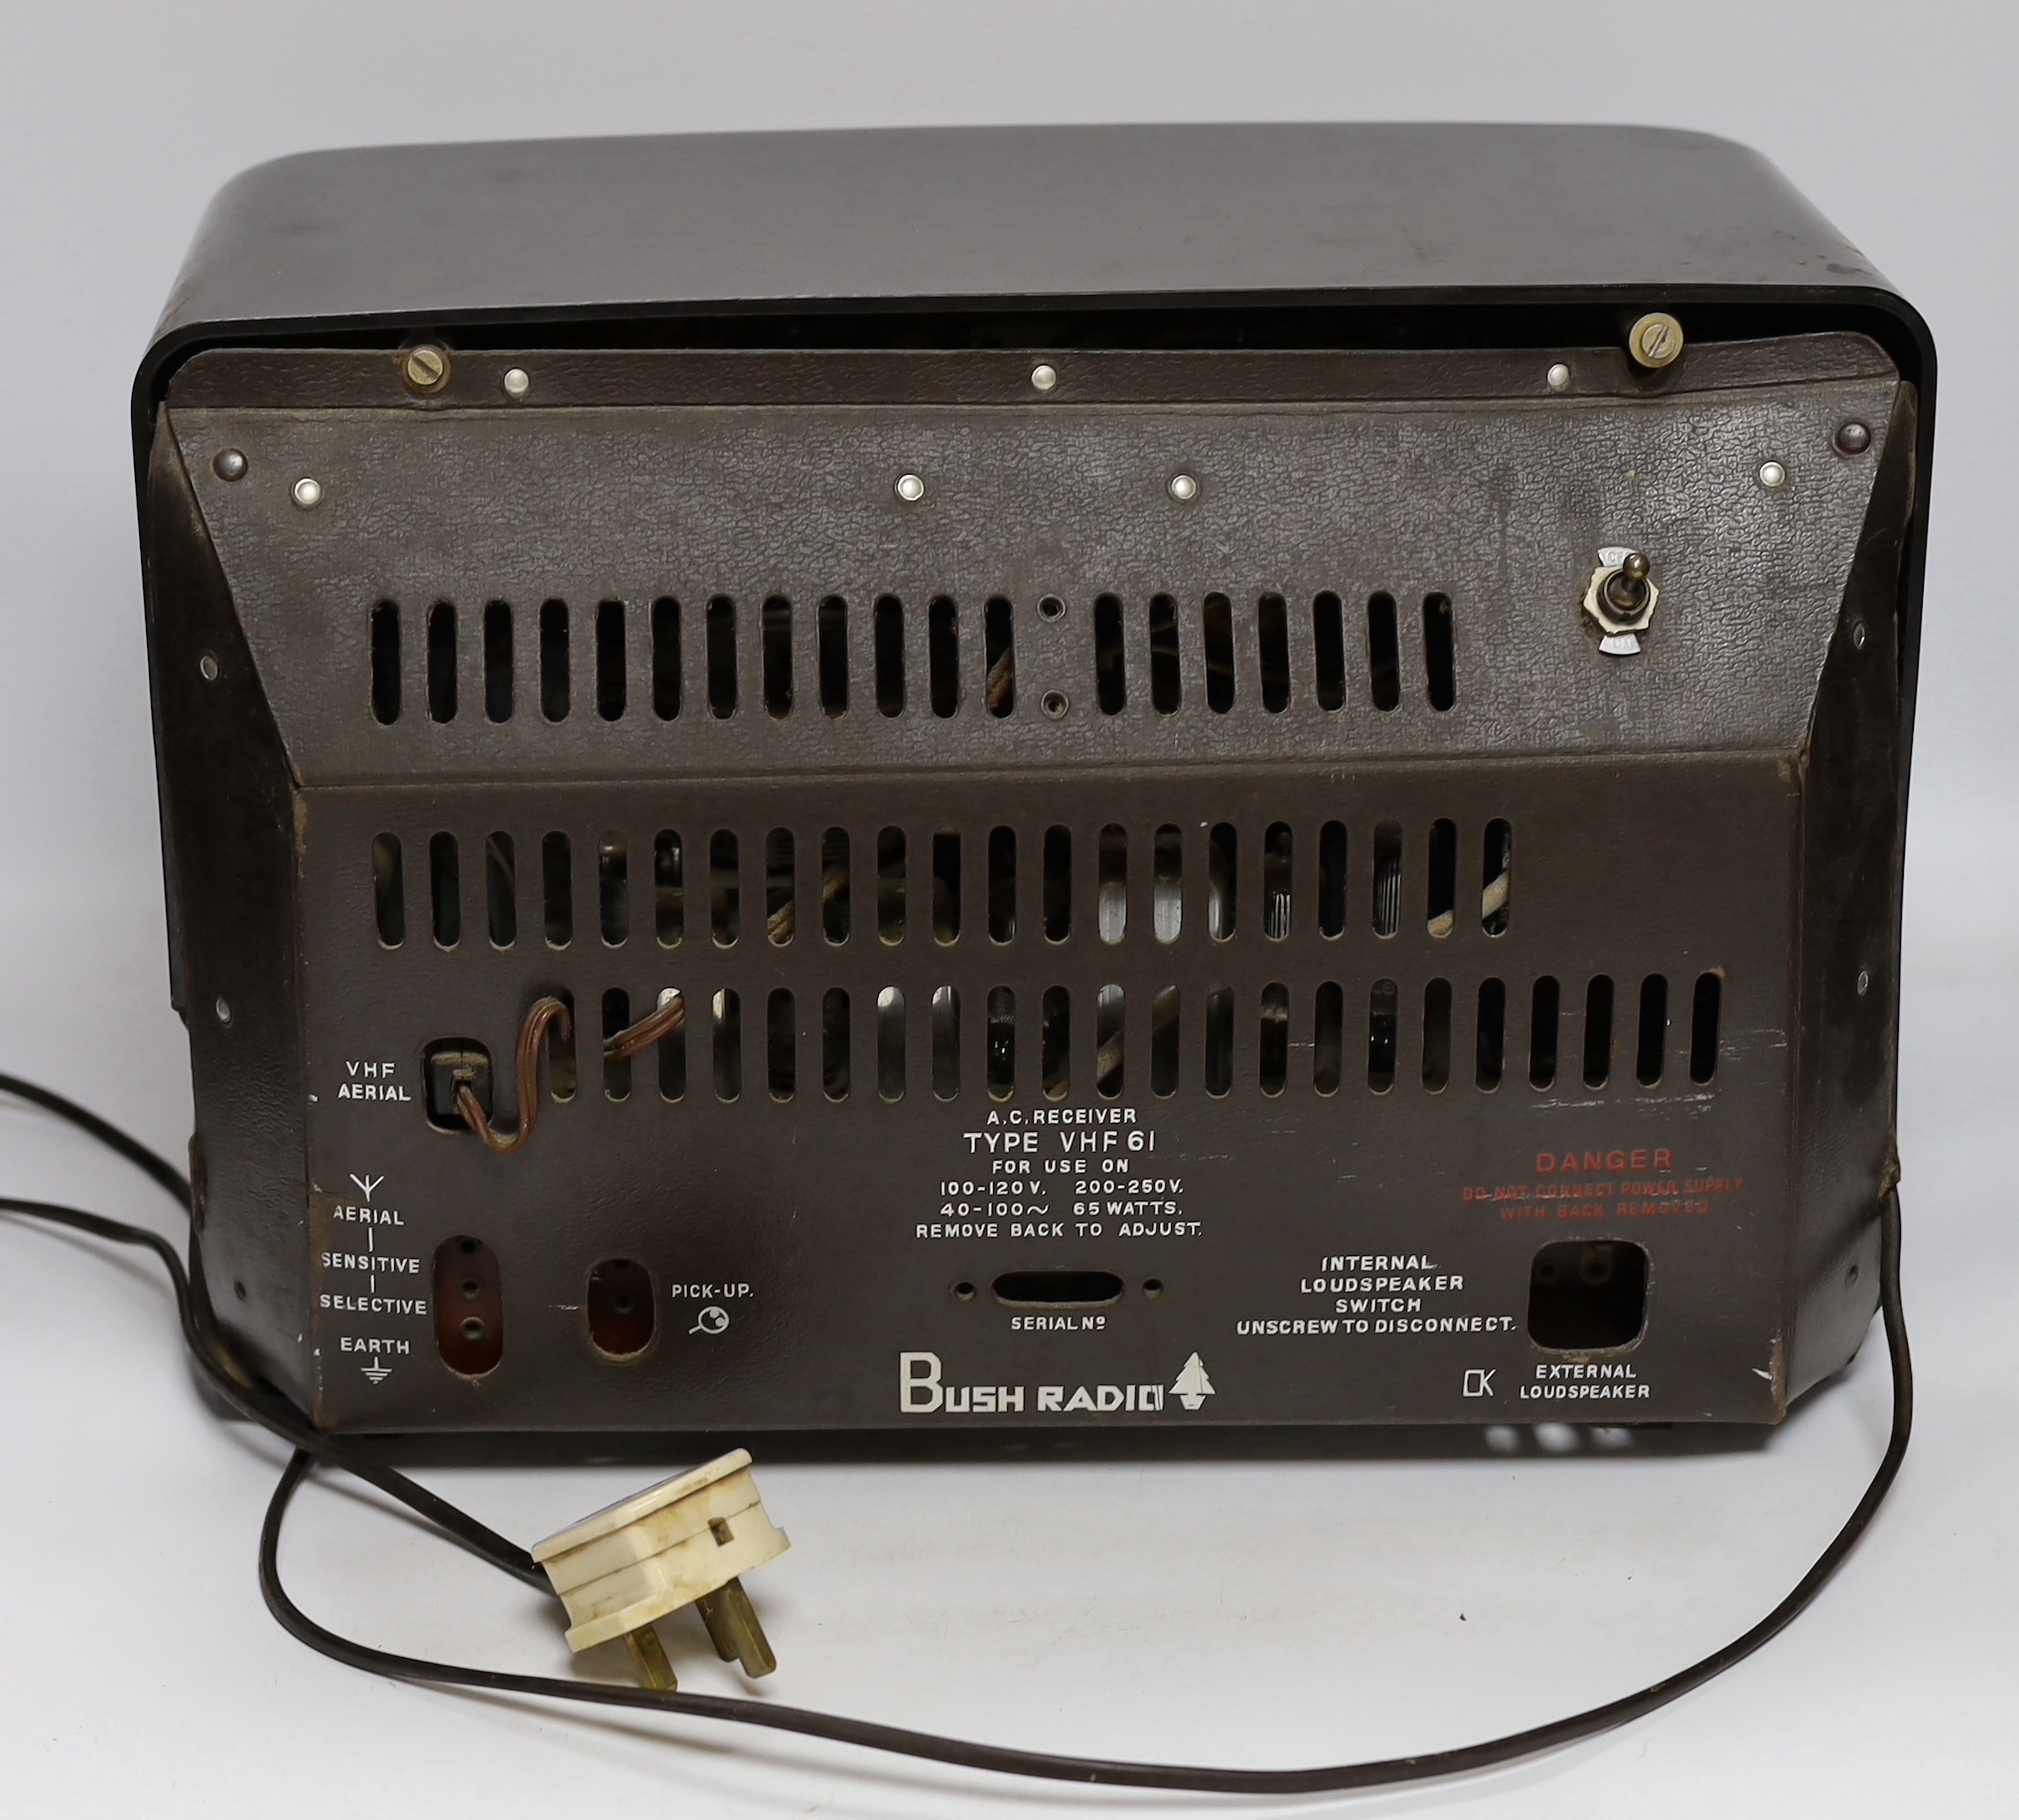 A vintage Bush bakelite radio